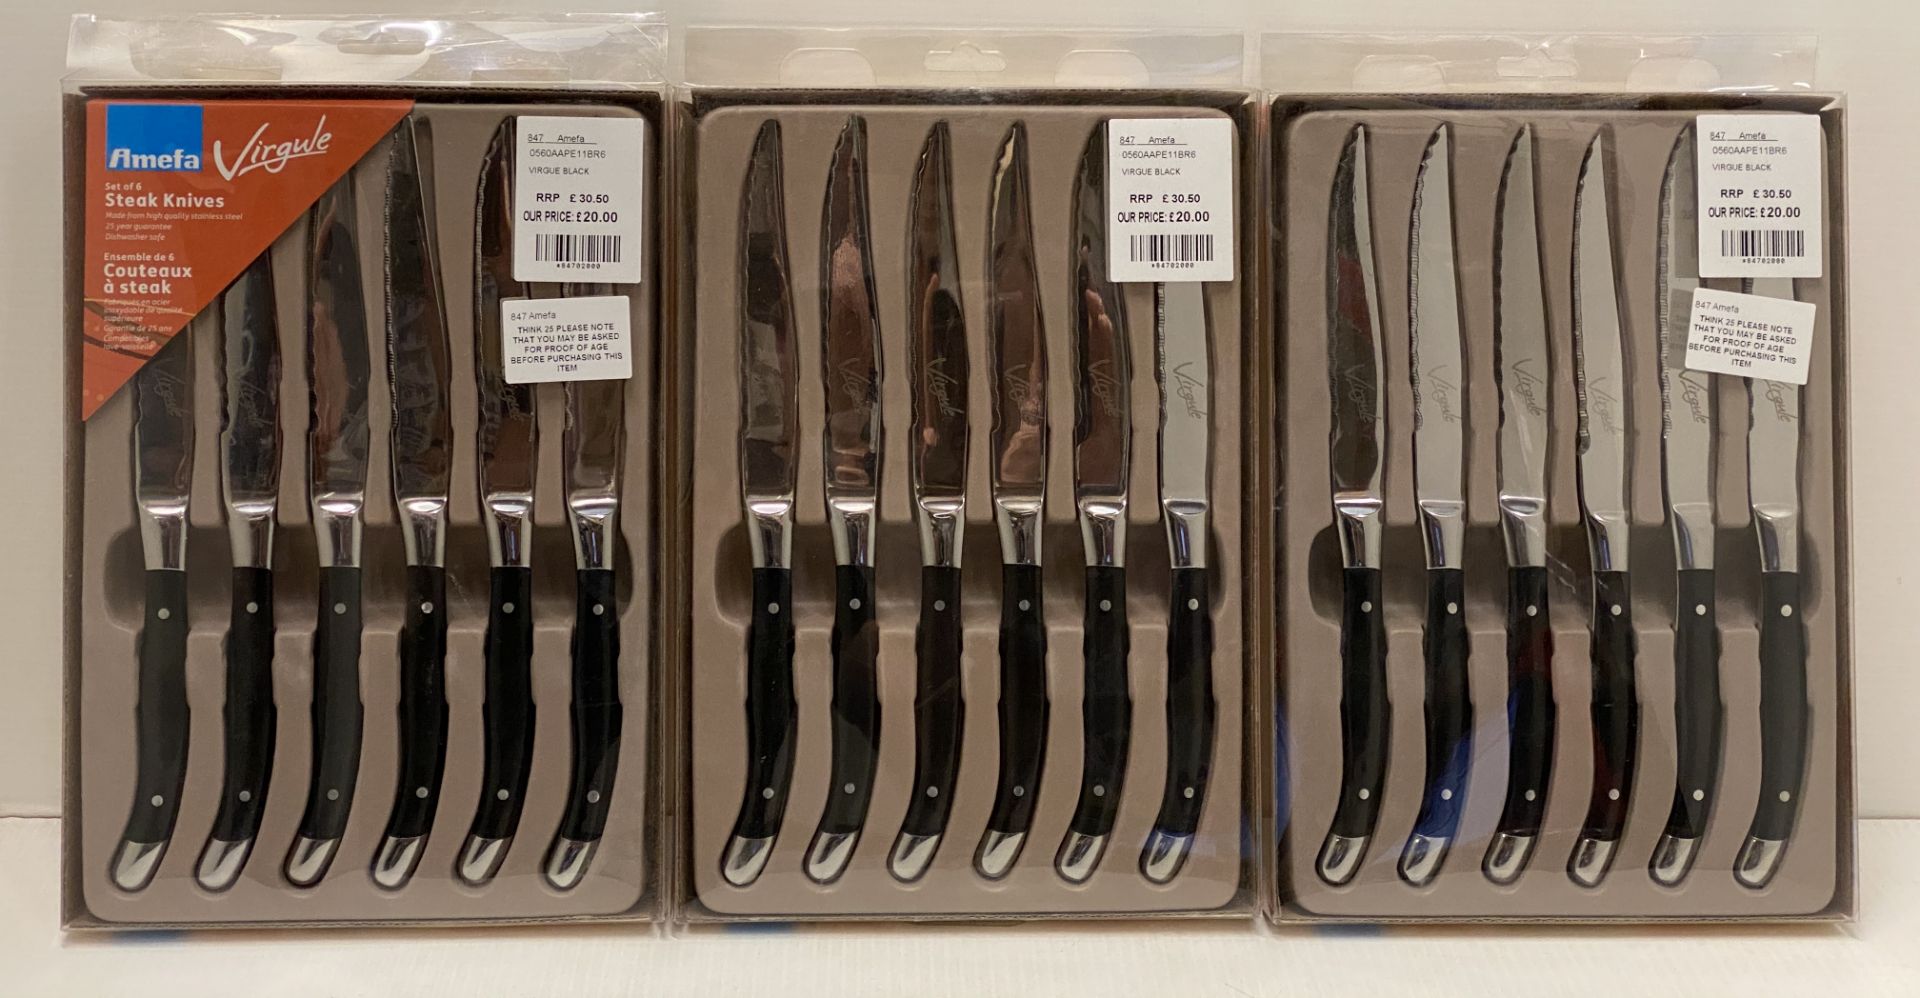 3 x Amefa Virgule sets of 6 black handled steak knives RRP £30.